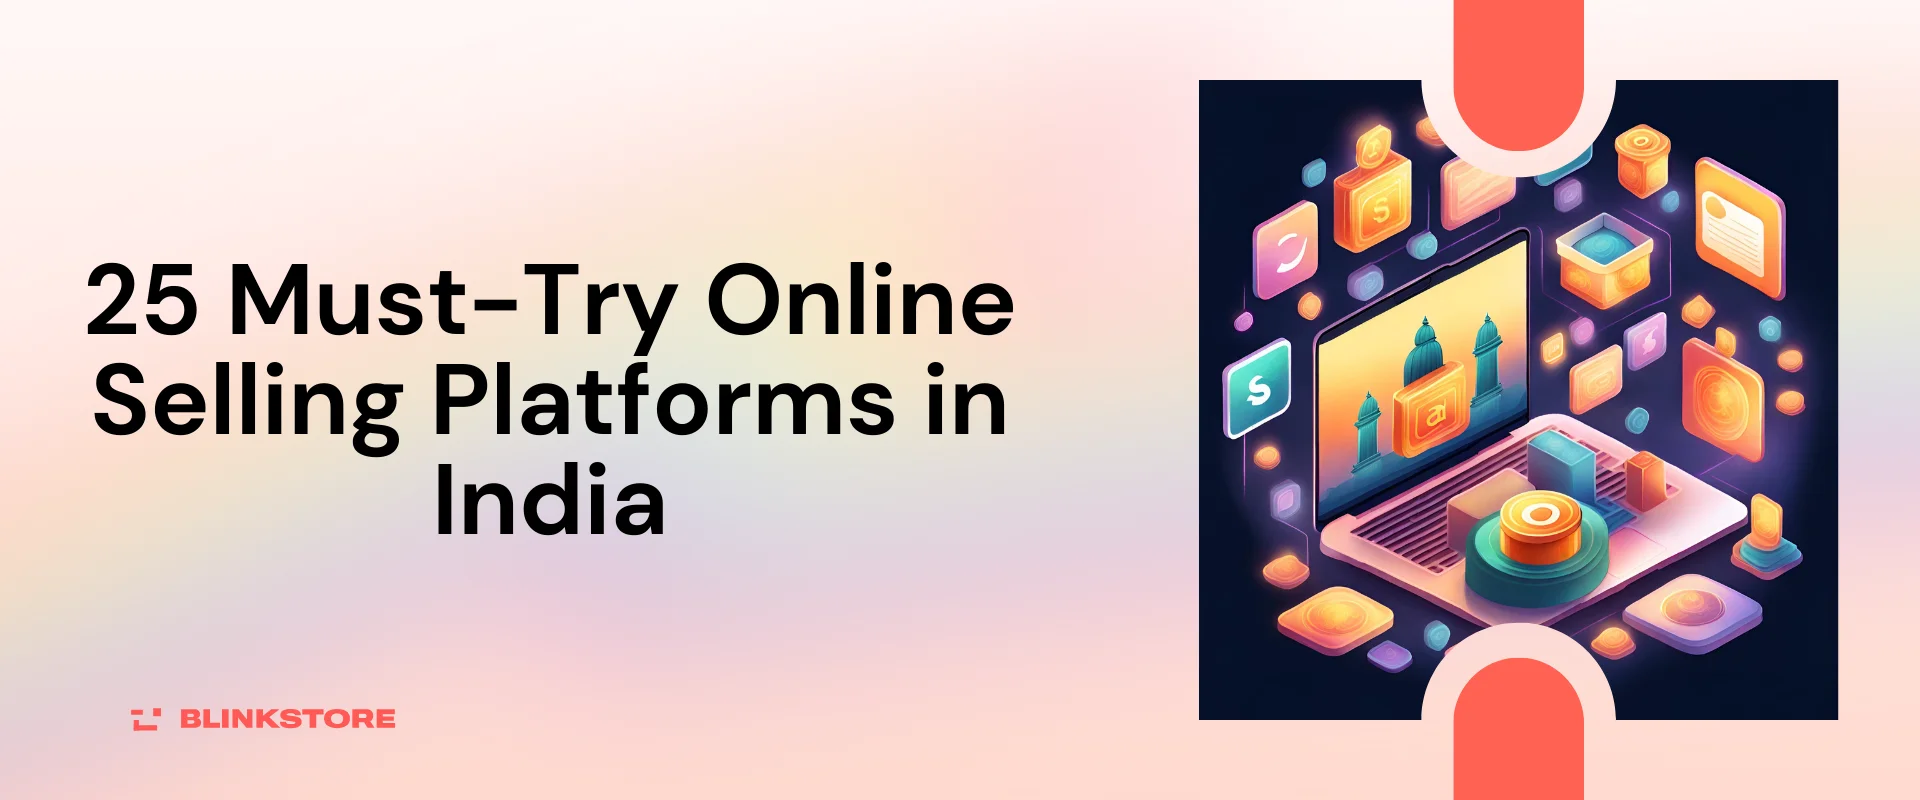 Online Selling Platforms in India